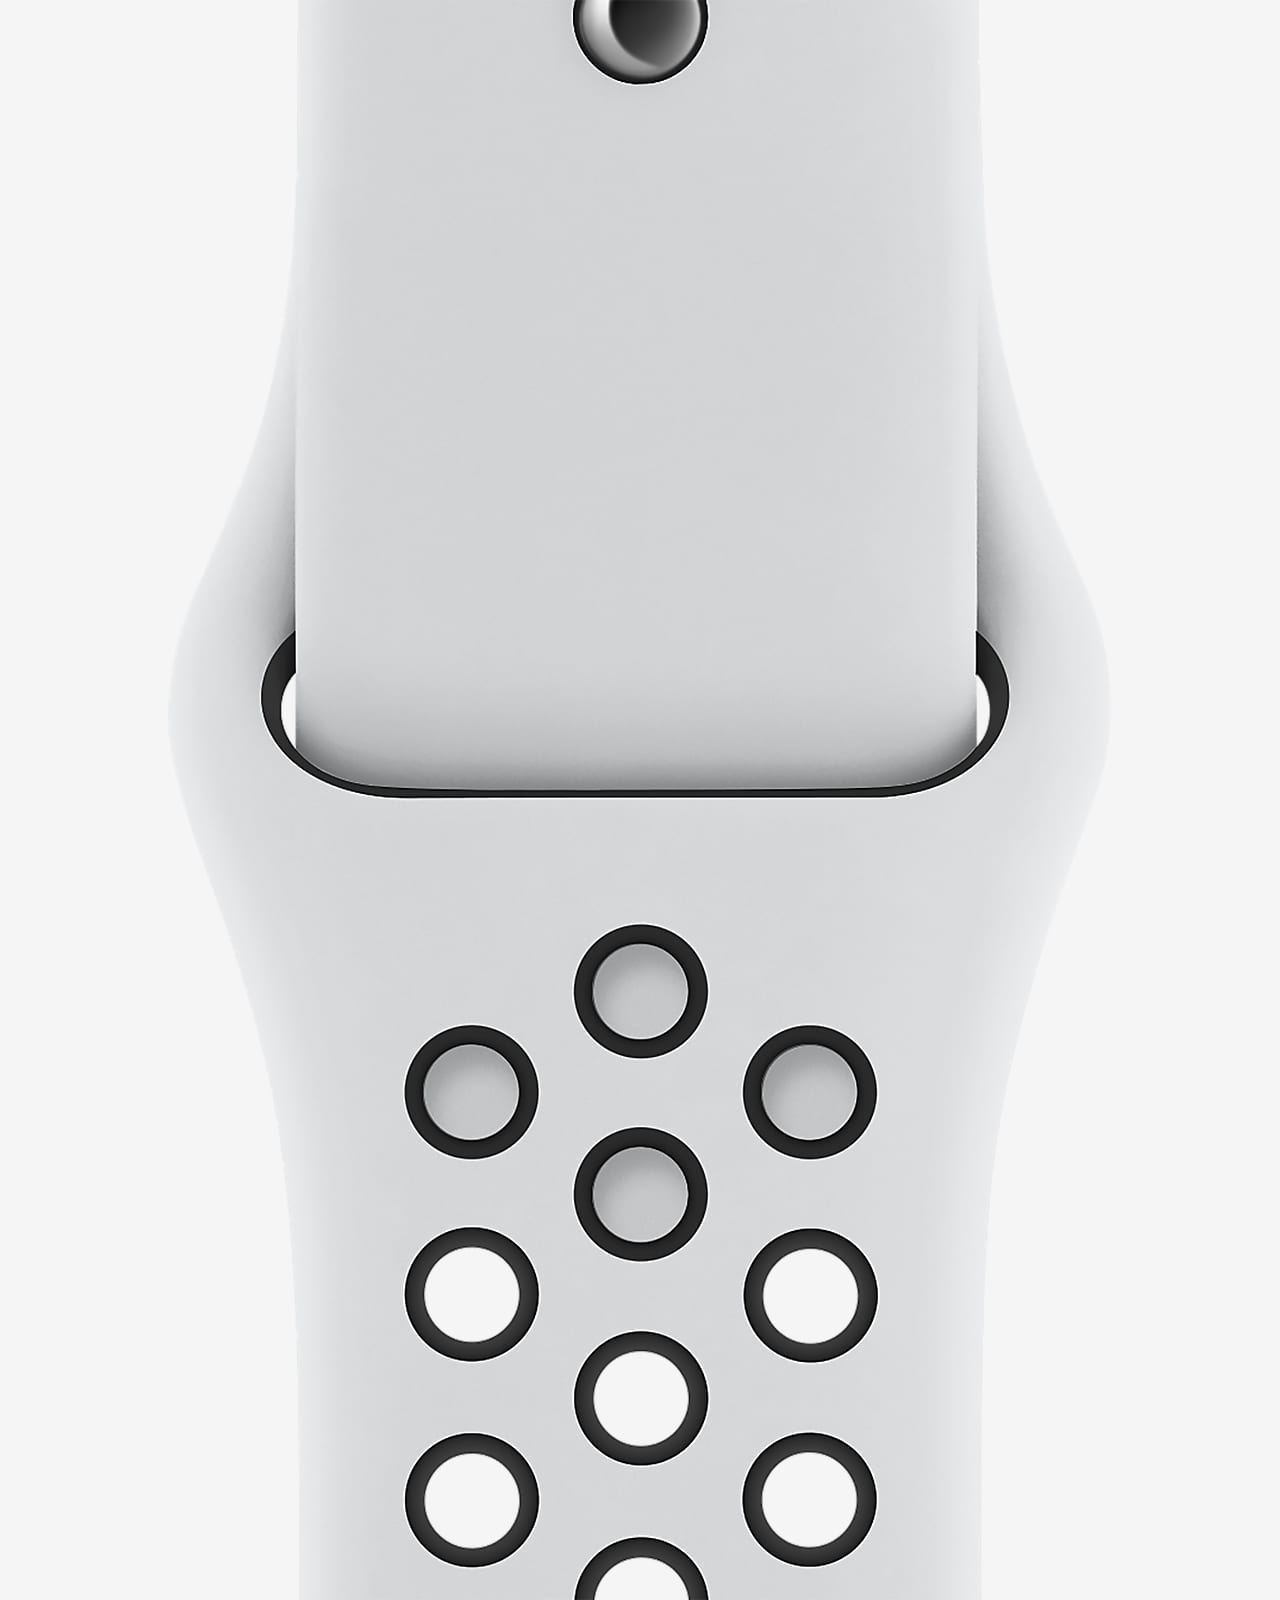 保証期間内Apple Watch Nike Series 5-40mm